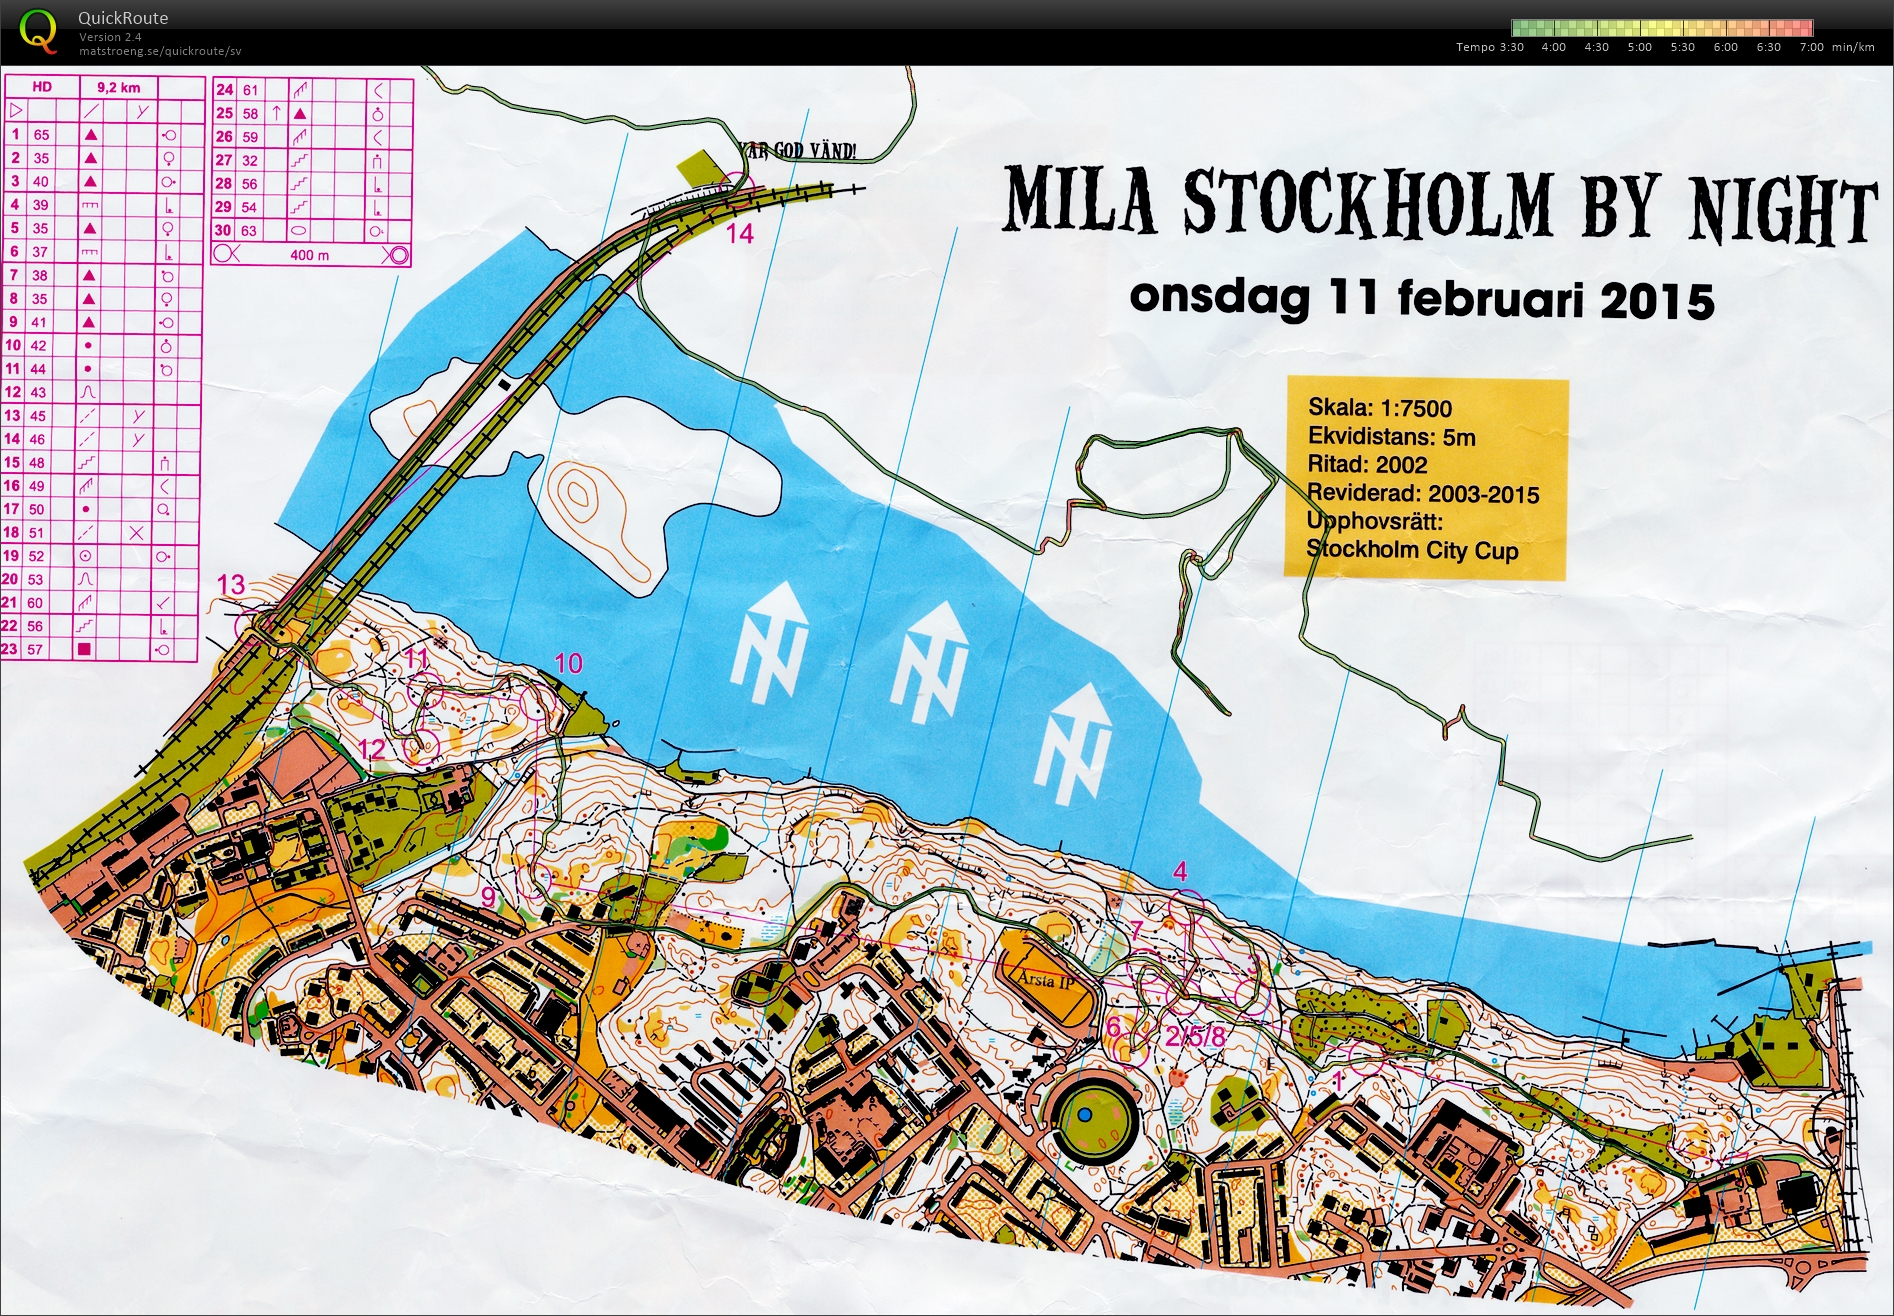 Mila Stockholm by Night #4, del 1 (2015-02-11)